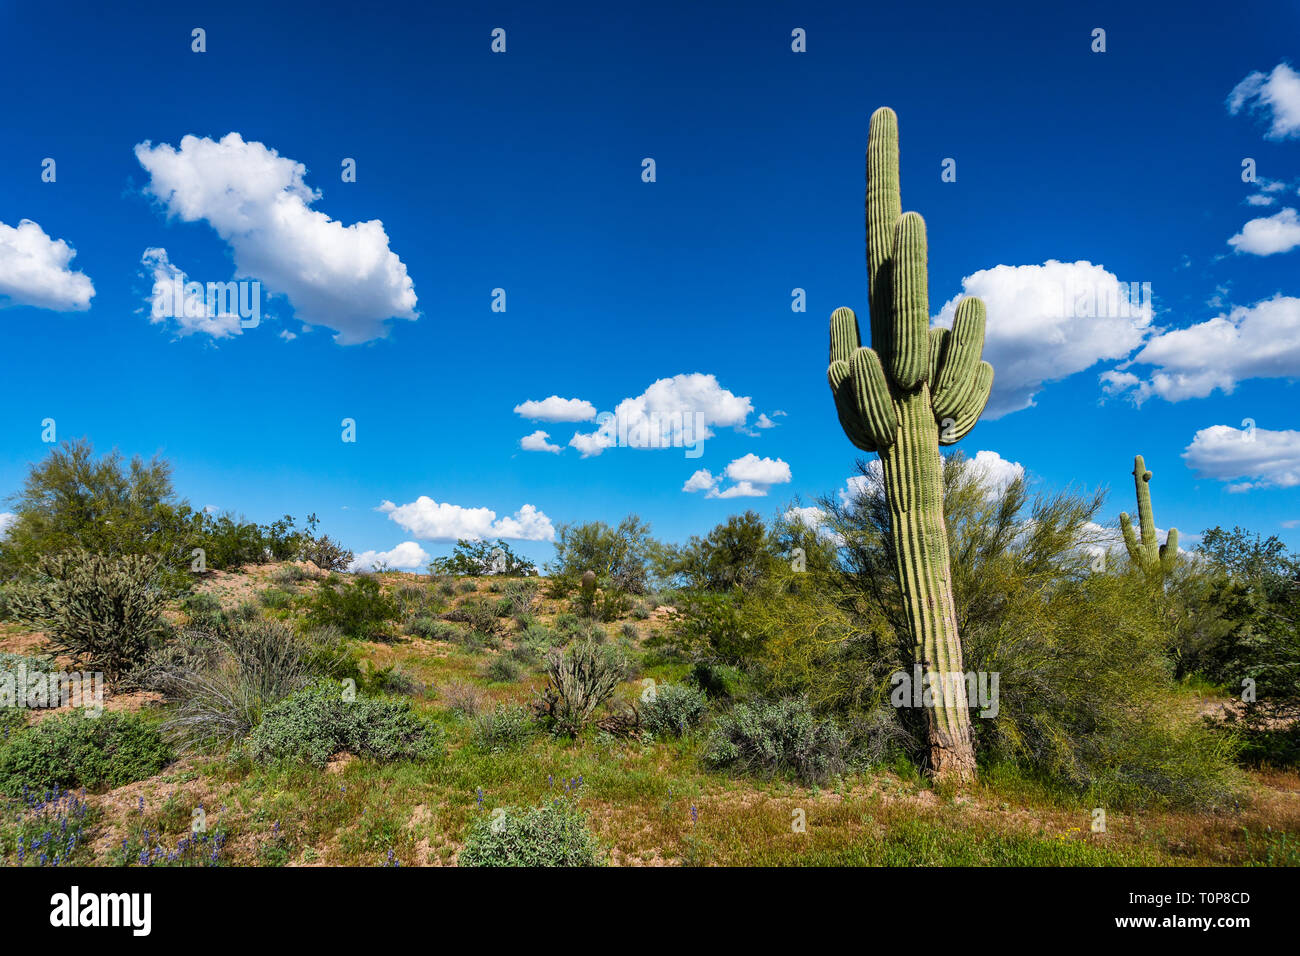 Giant Saguaro cactus in a desert landscape with blue sky in Phoenix, Arizona Stock Photo